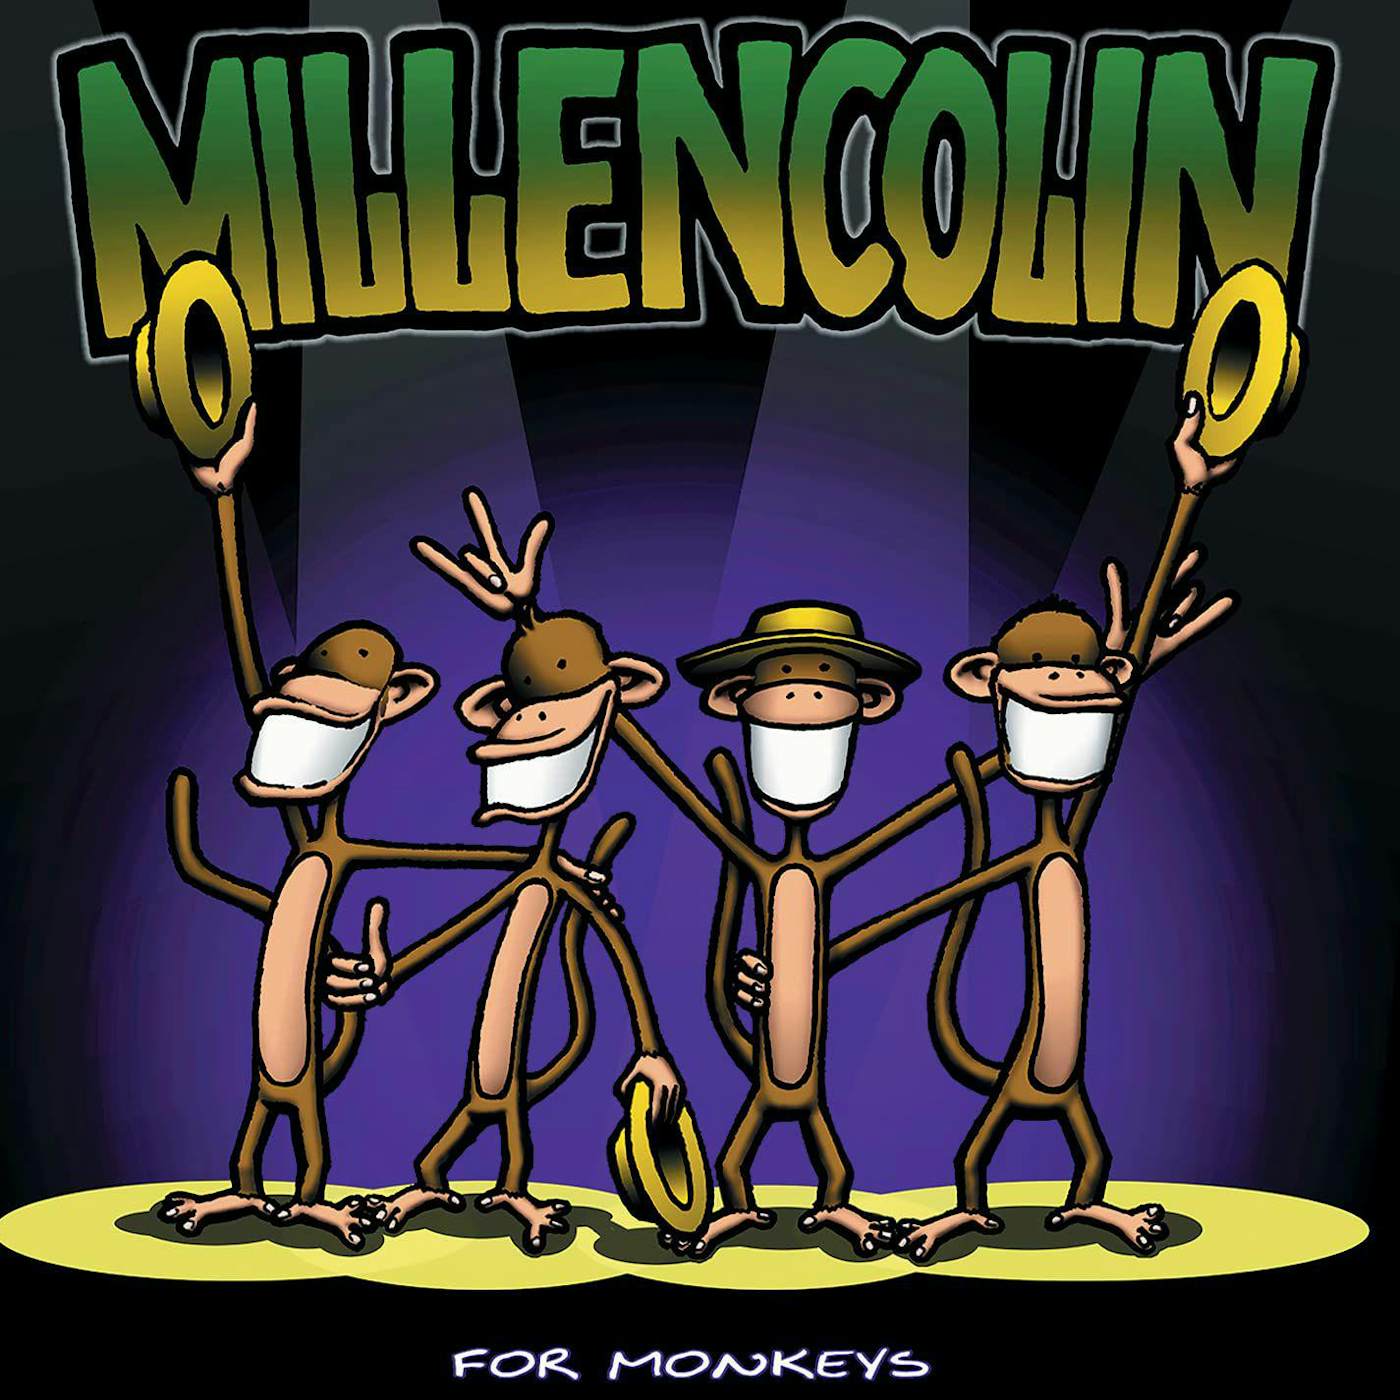 Millencolin For Monkeys (Anniv. Ed.) (Psychedelic Green) Vinyl Record